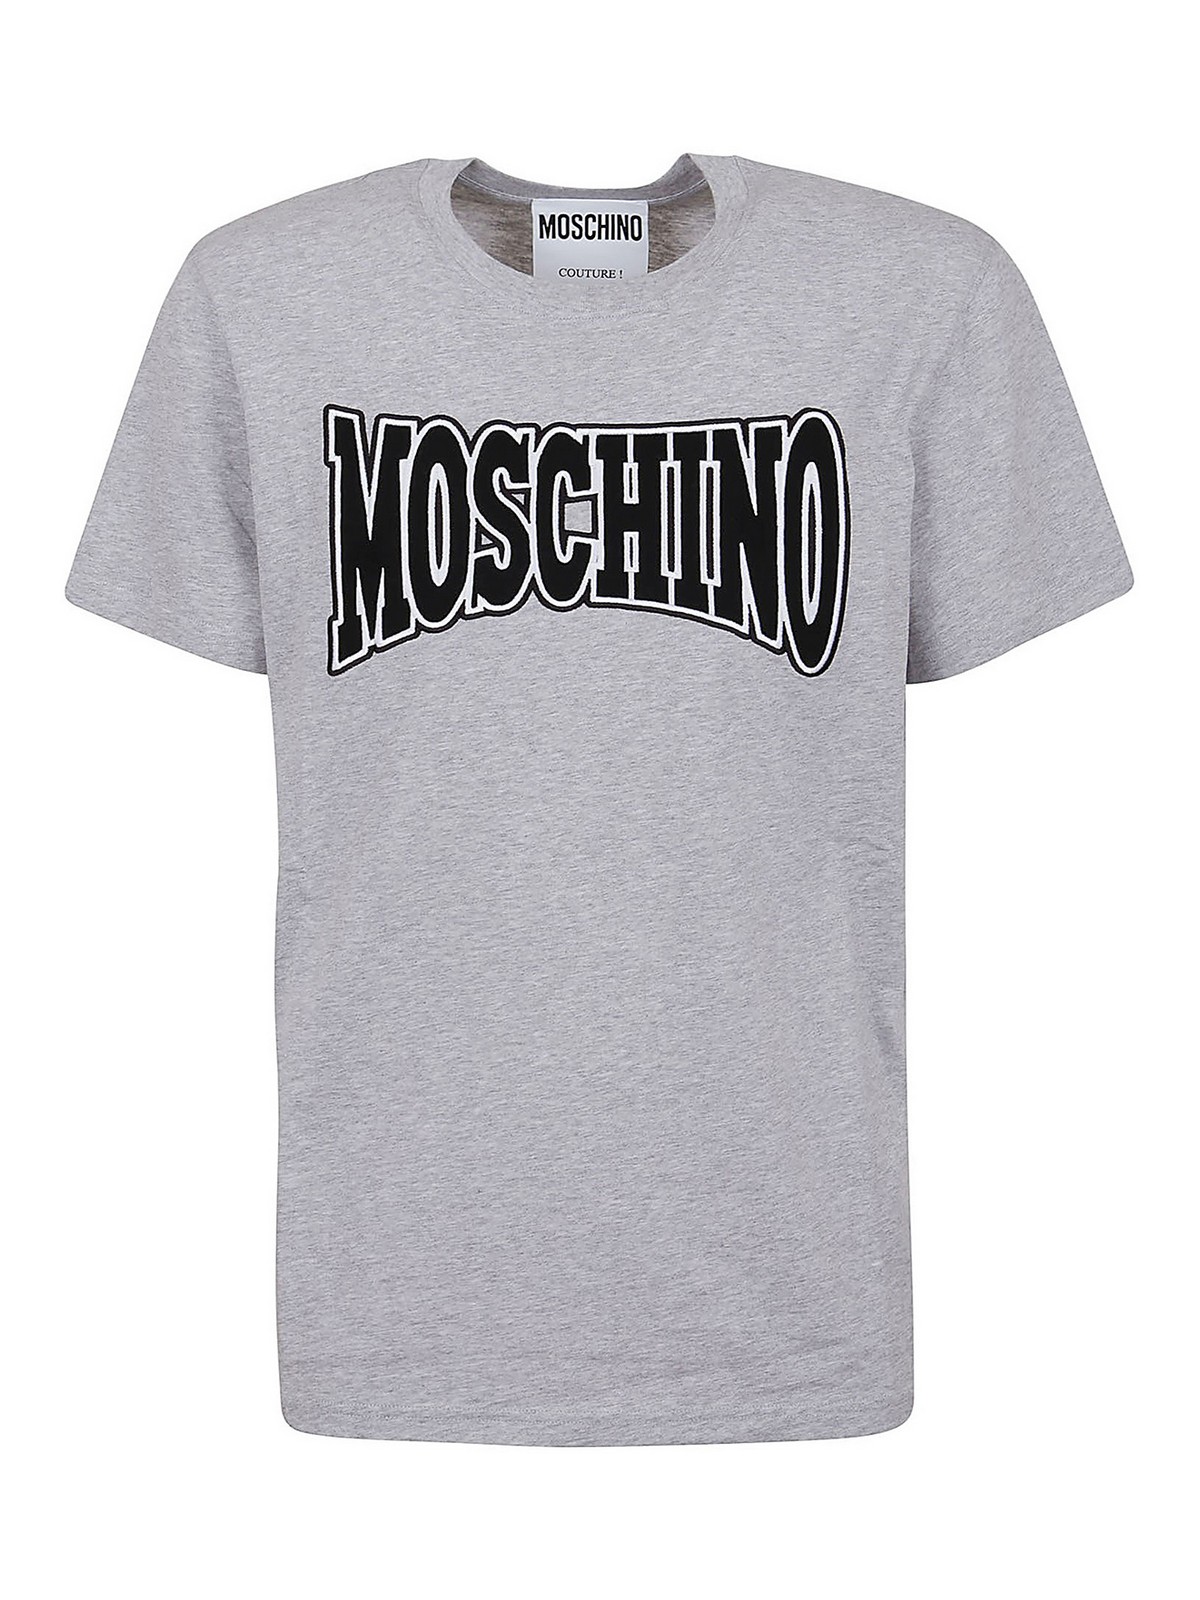 Moschino Black Embroidered Shirt